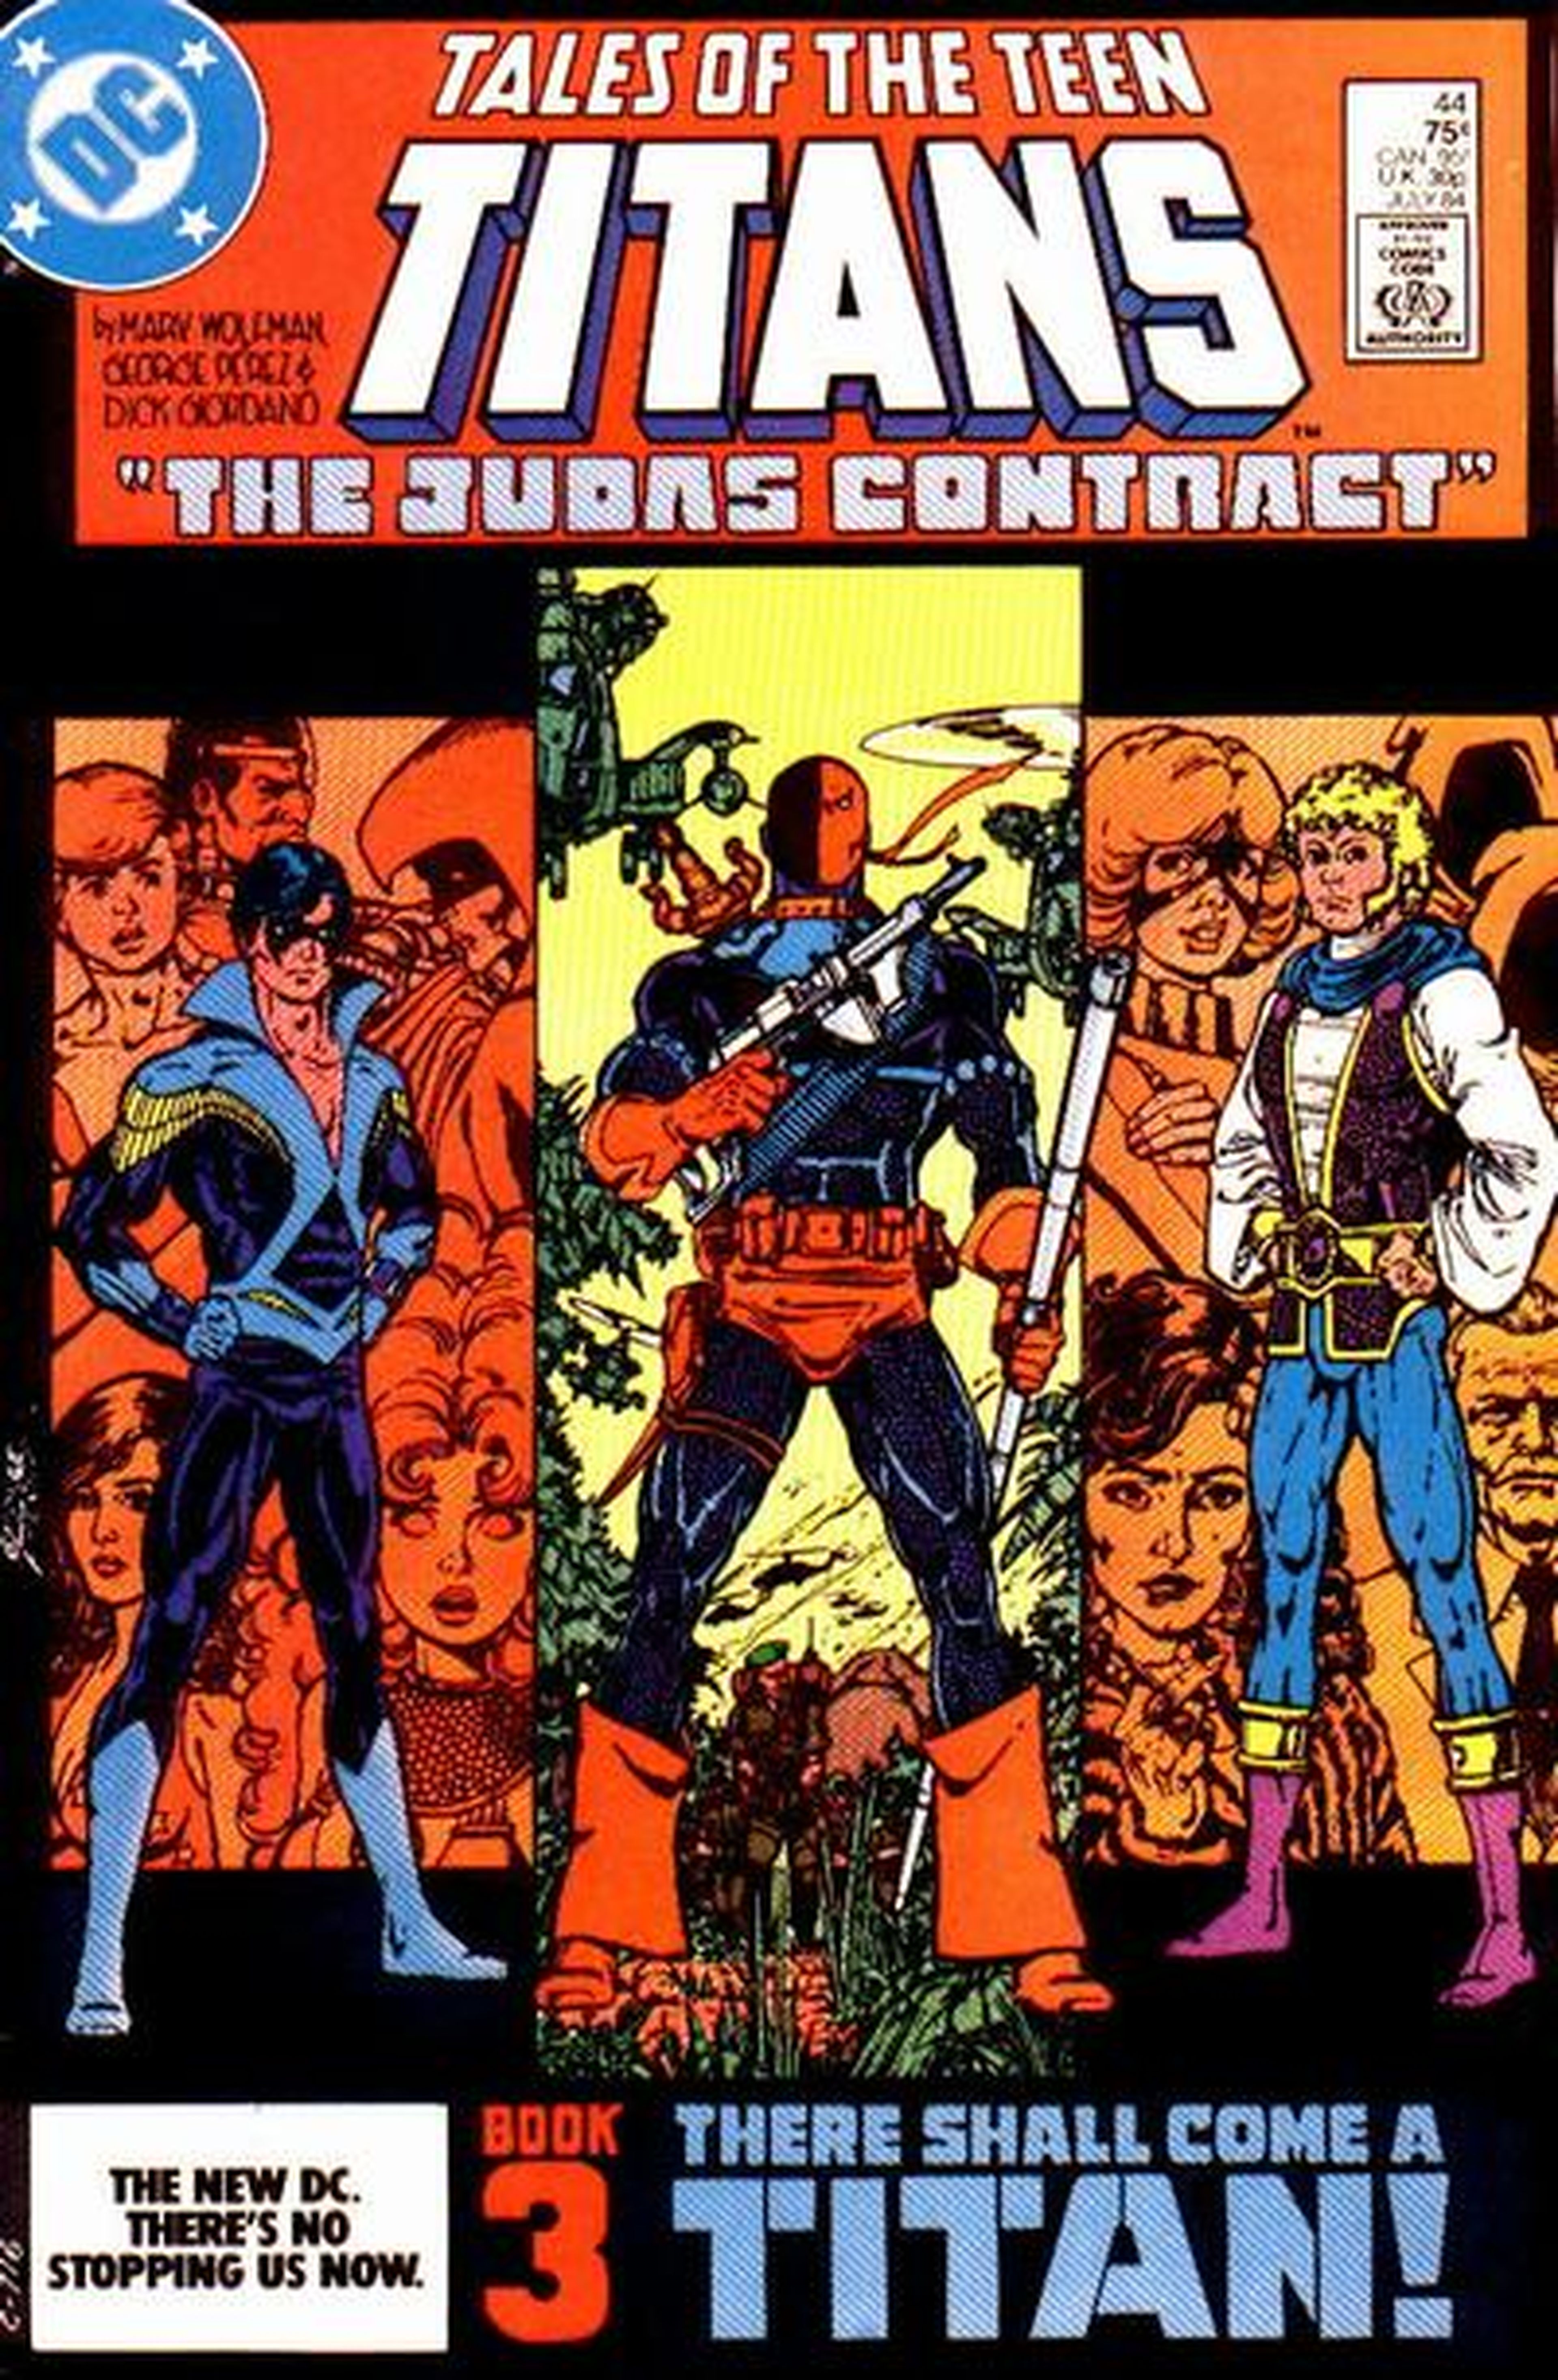 Tales of the Teen Titans #44 (1984) - Primera aparición de Dick Grayson como Nightwing